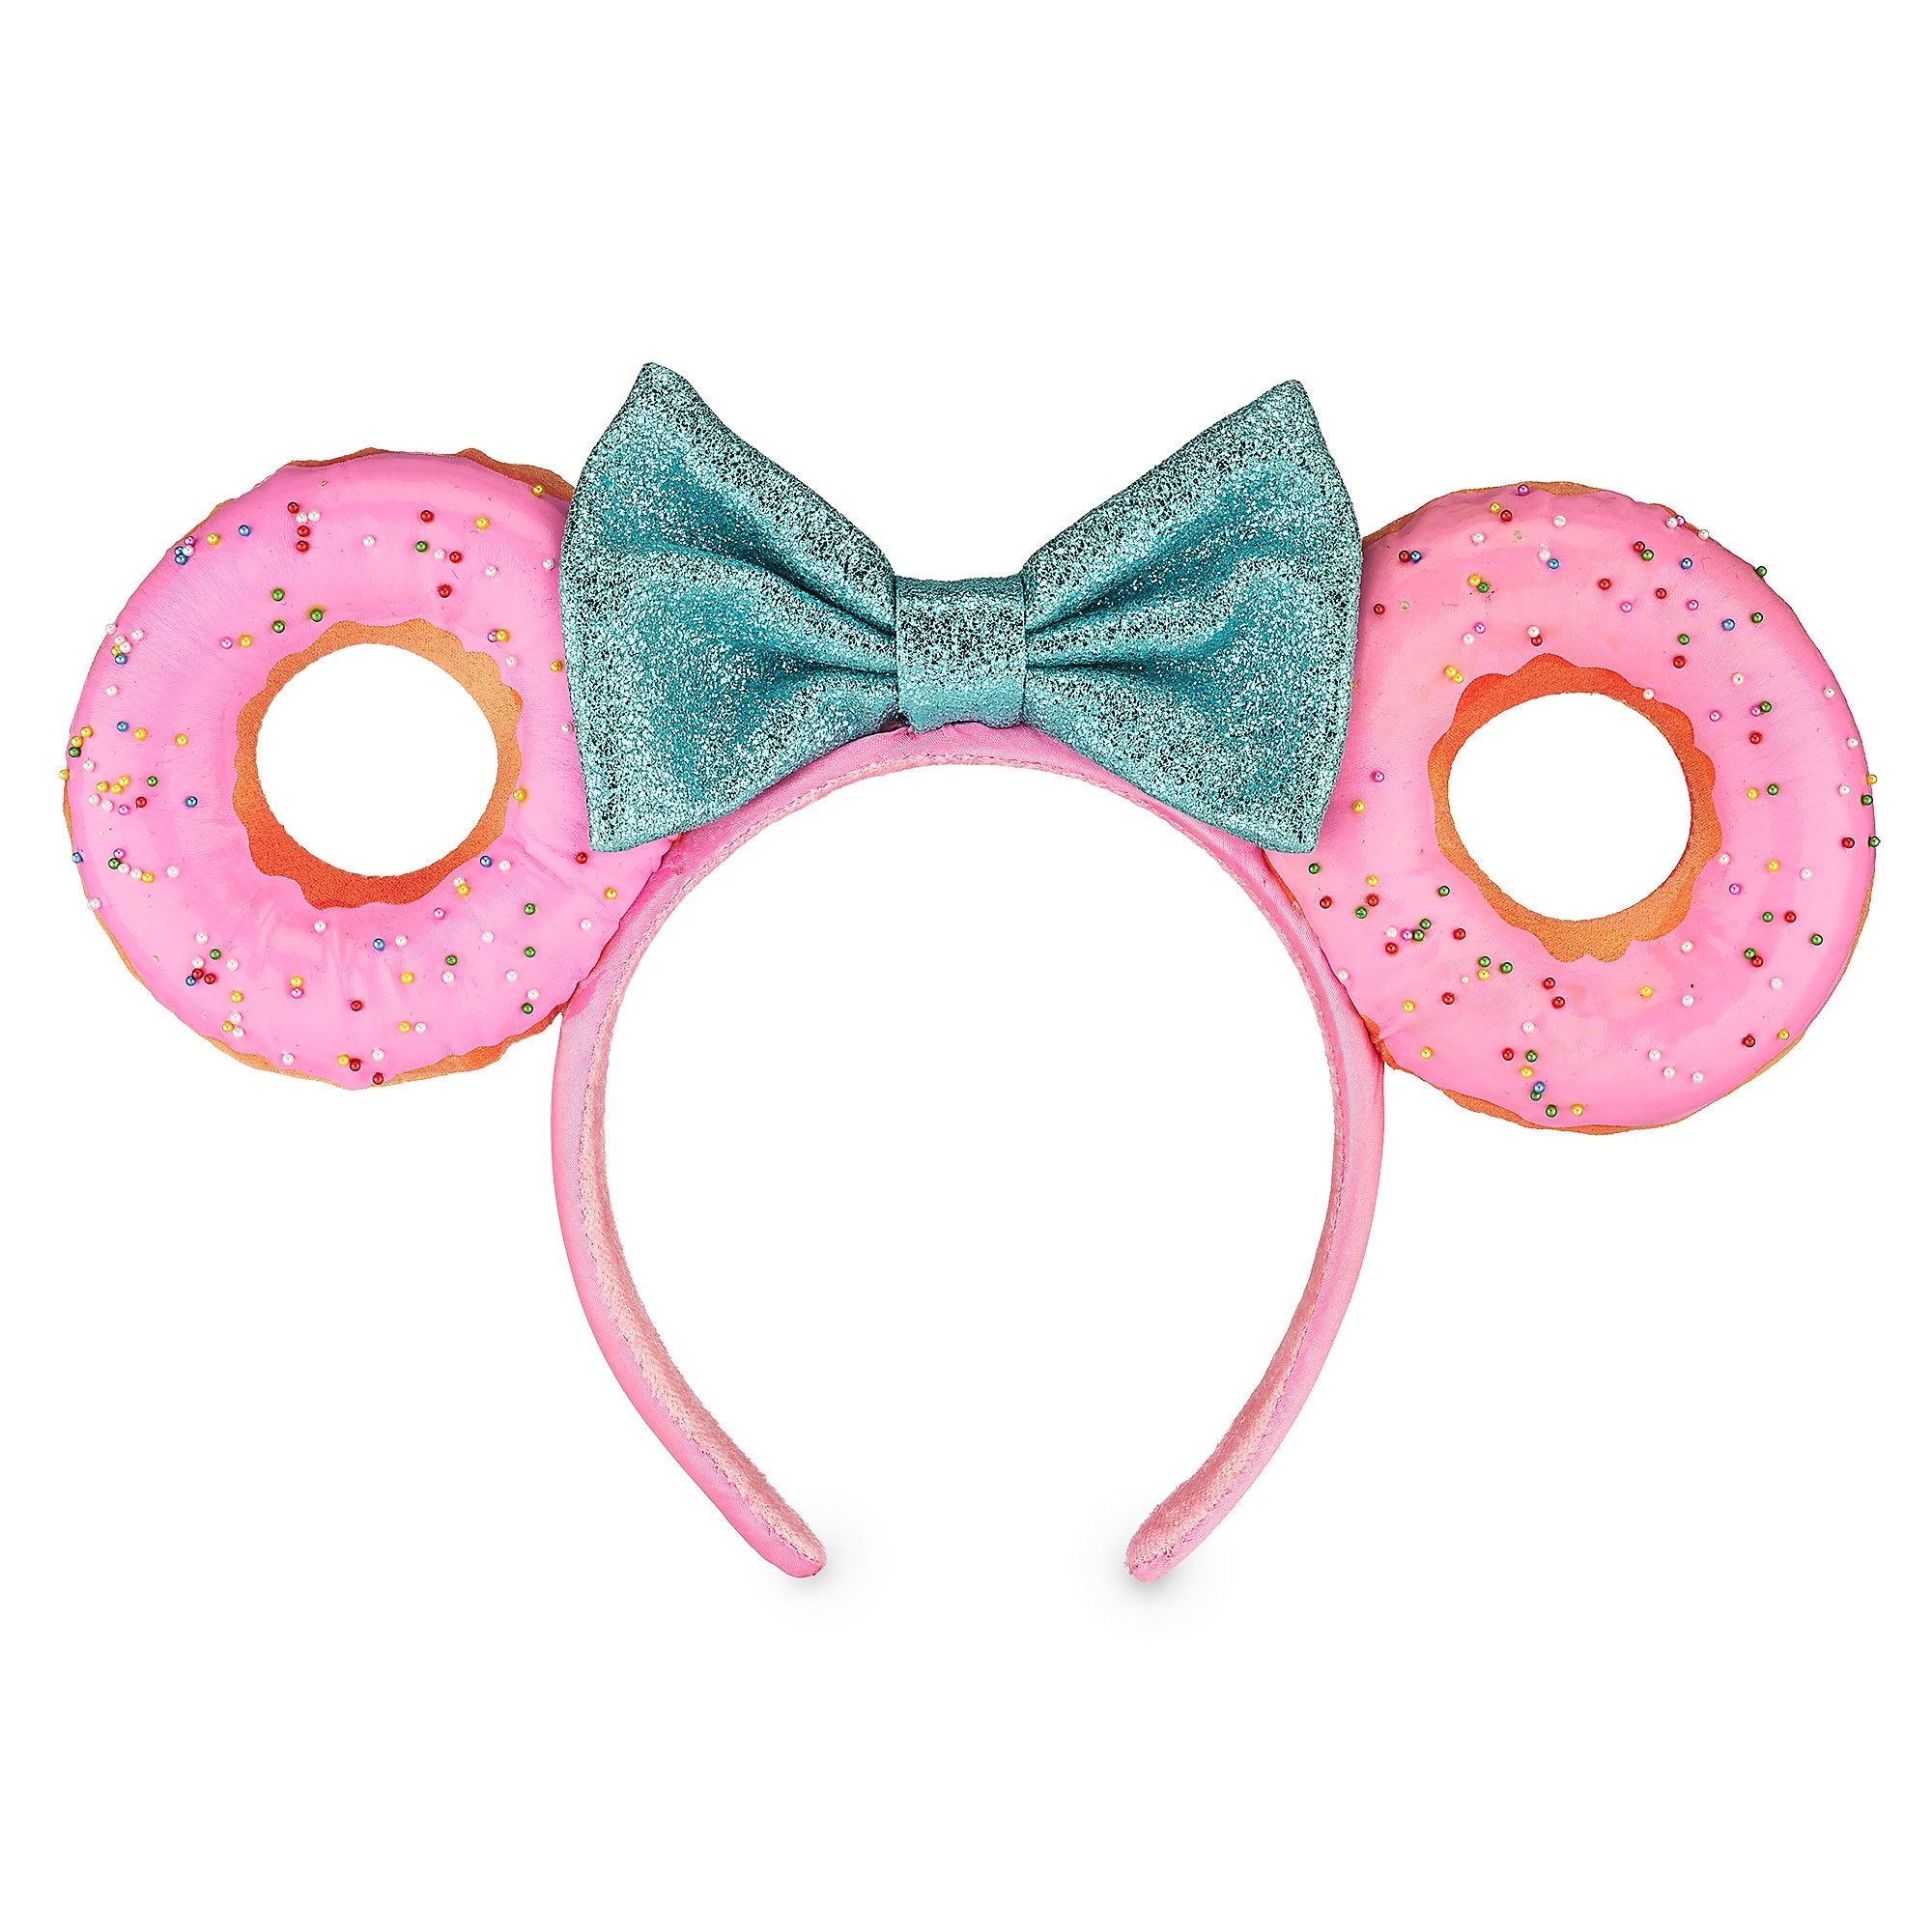  Minnie Mouse Donut Ear Headband image